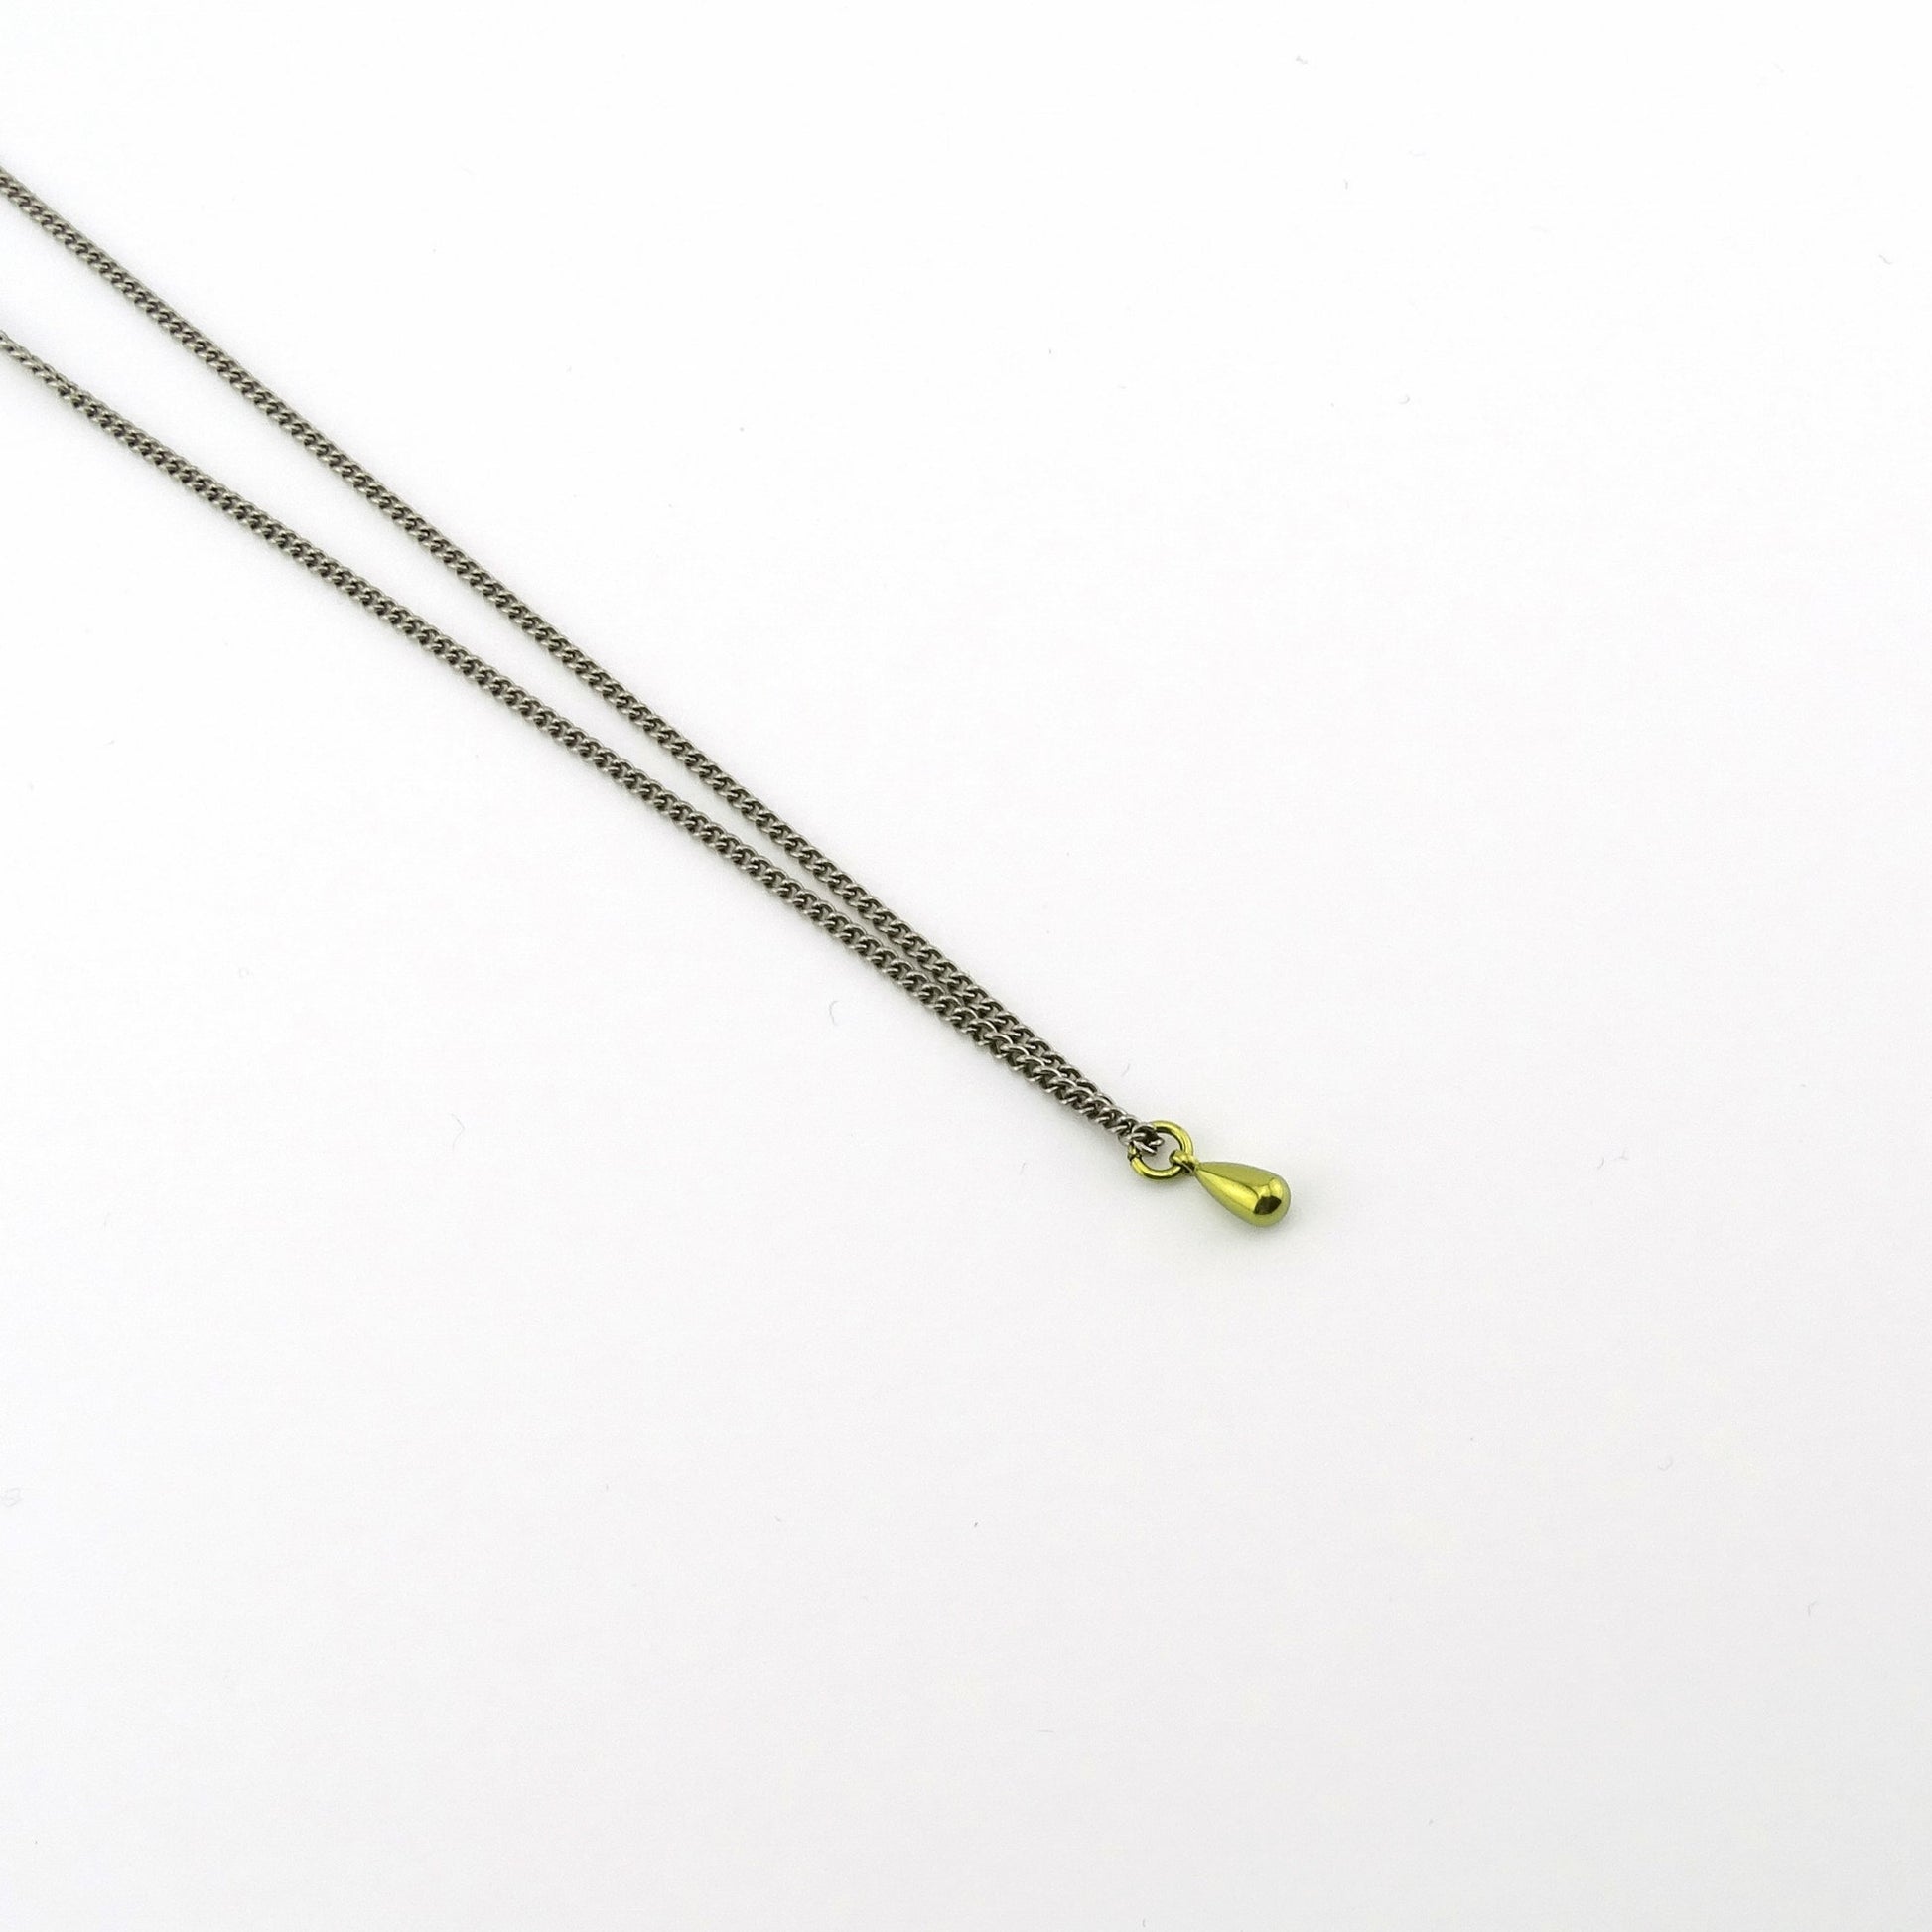 Tiny Gold Teardrop Titanium Necklace, Gold Anodized Titanium Droplet, Nickel Free Hypoallergenic Titanium Chain Necklace for Sensitive Skin